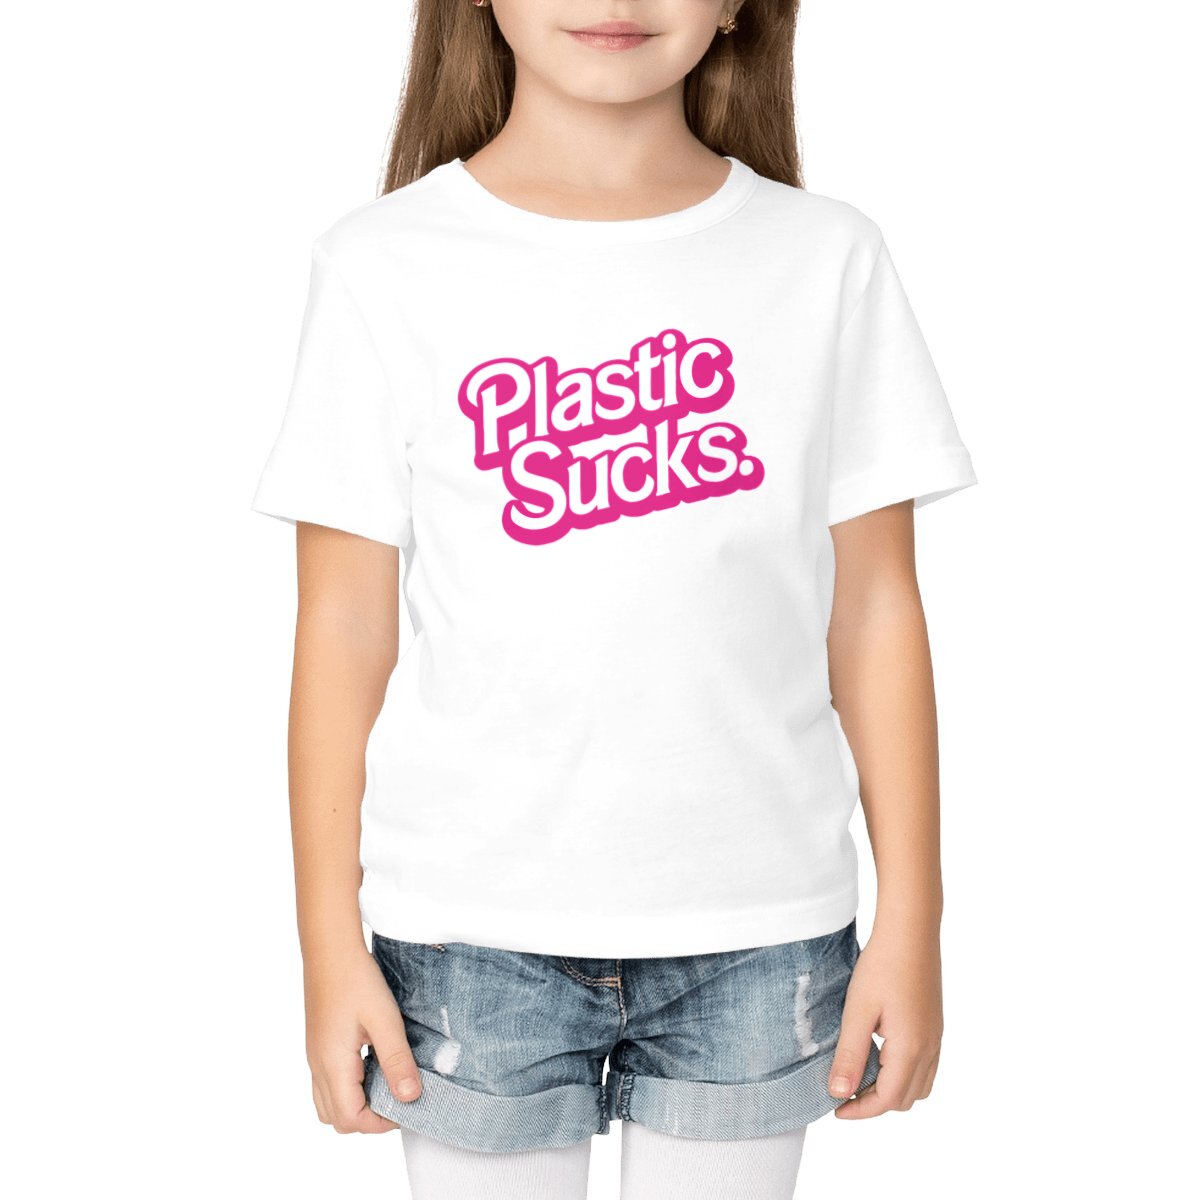 Plastic sucks barbie kids t-shirt